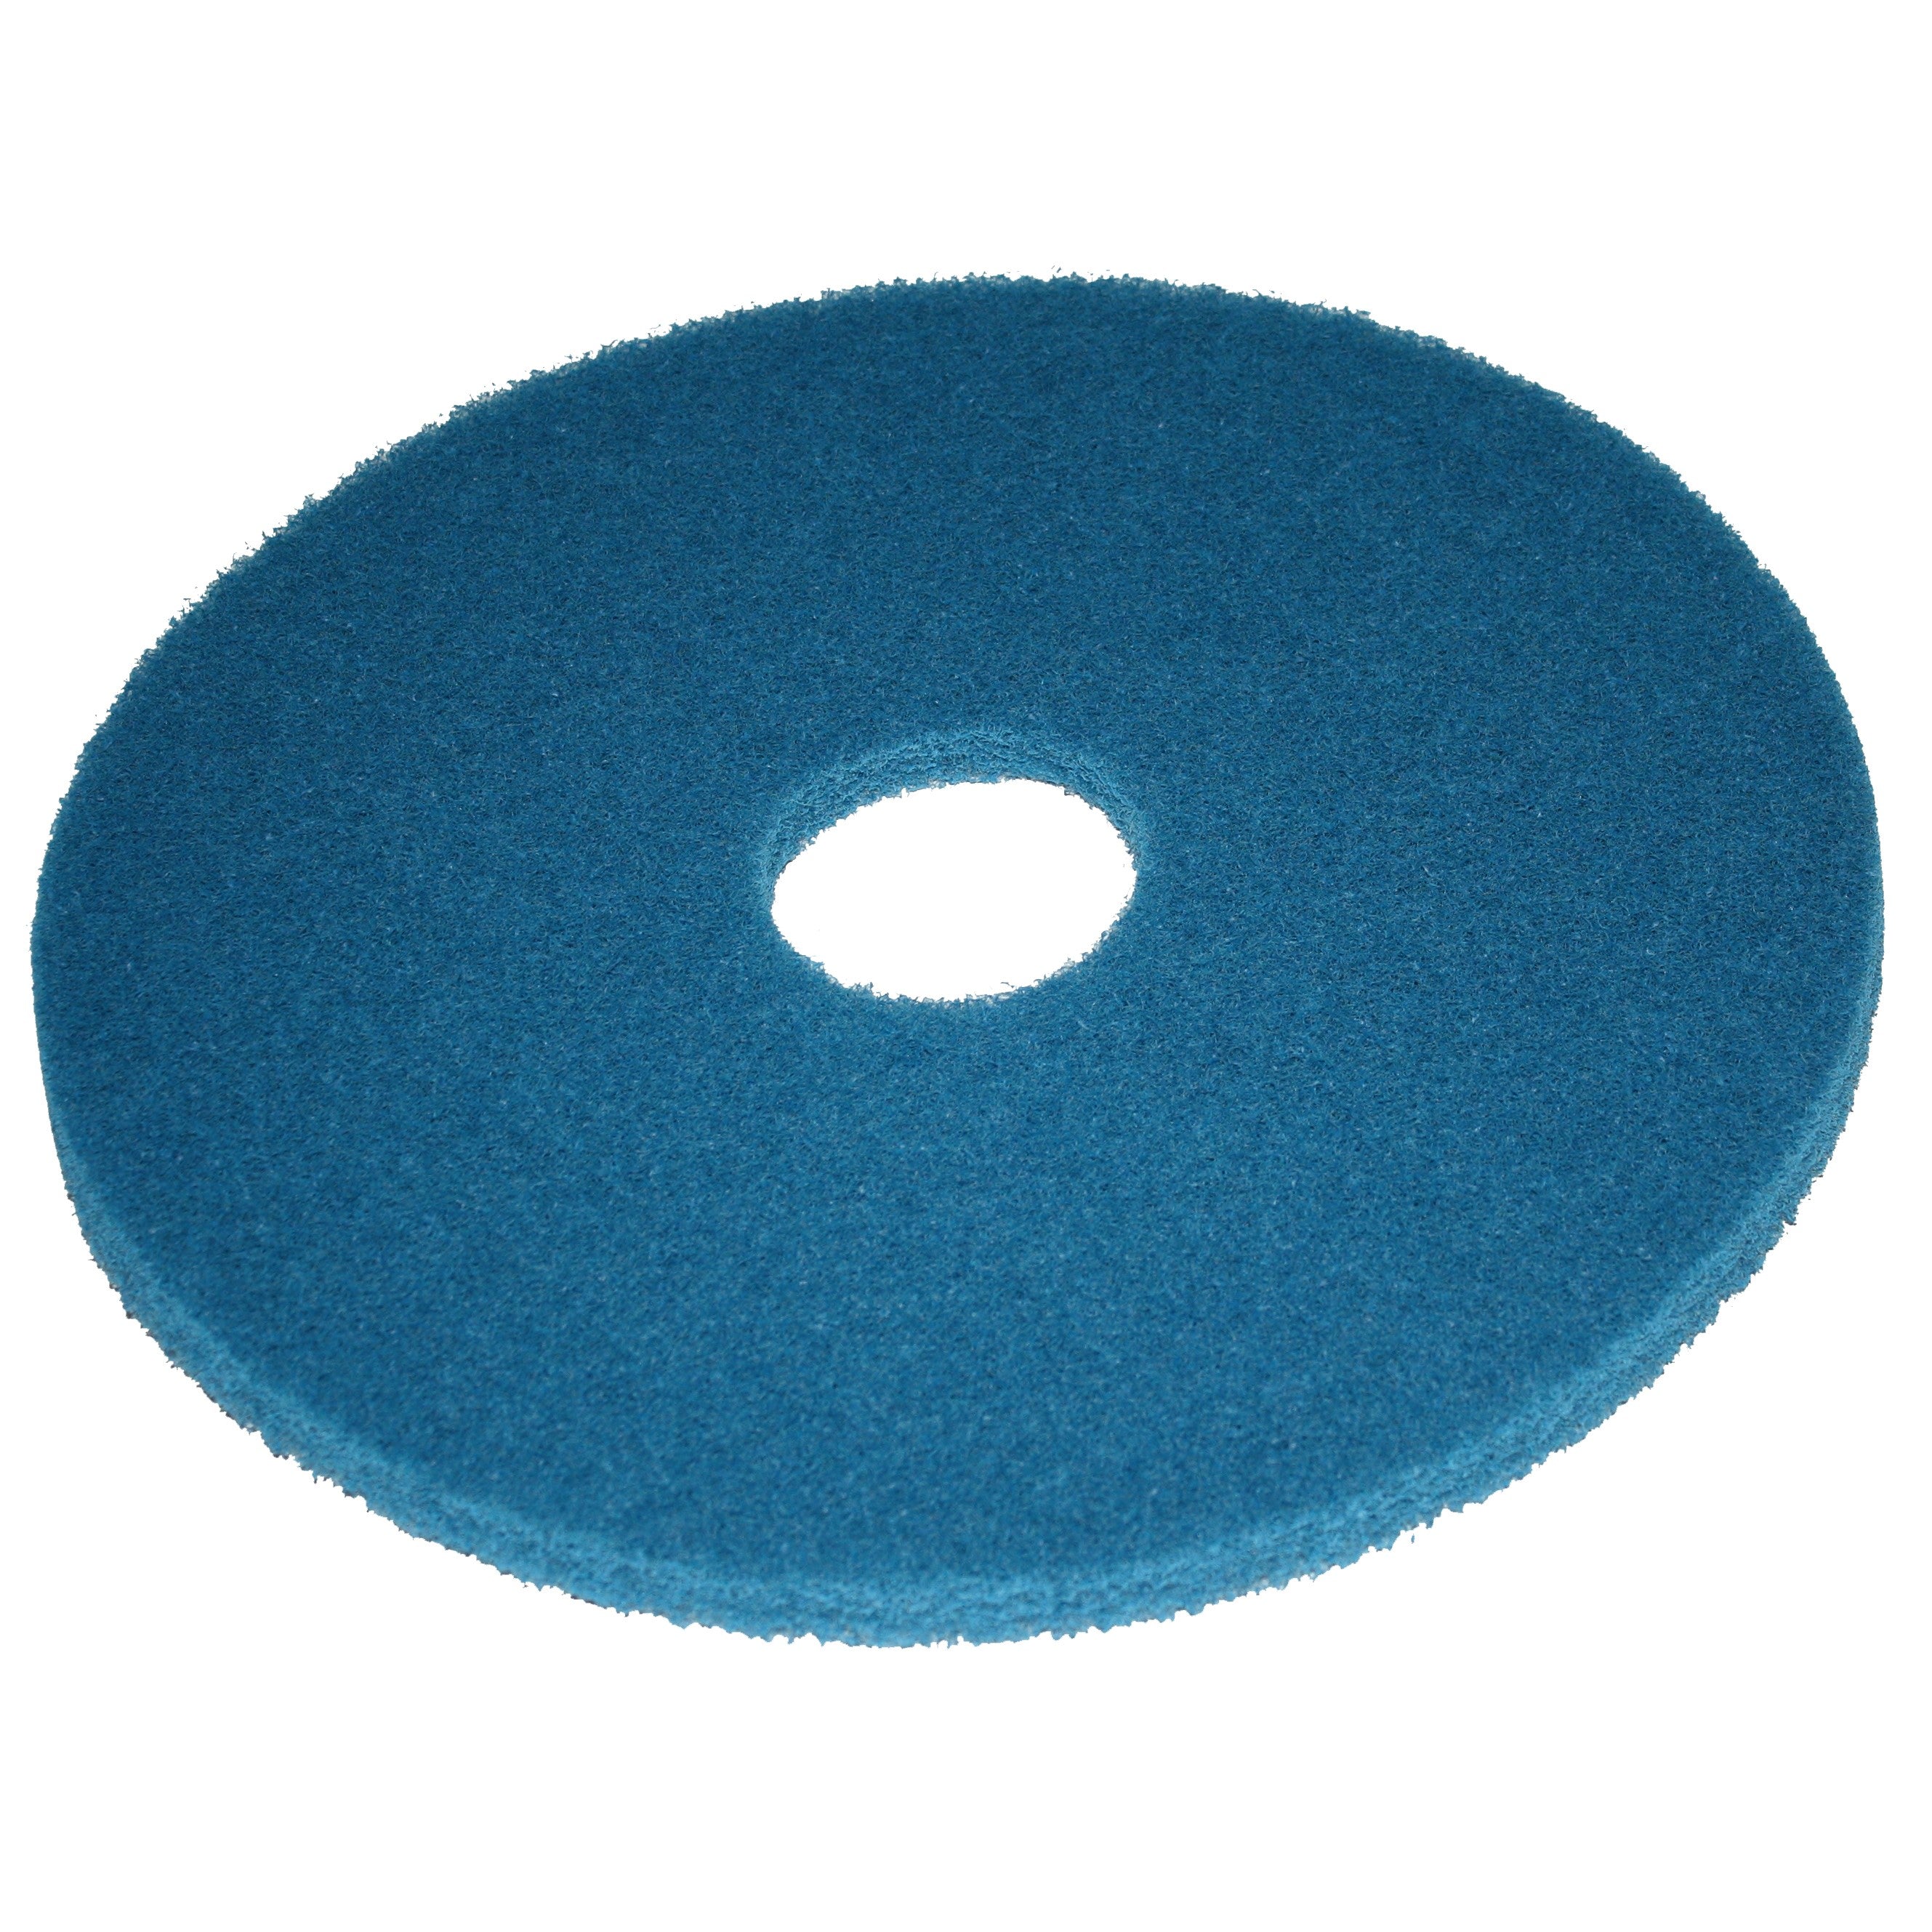 Pad blau, Ø 305 mm, Polyester